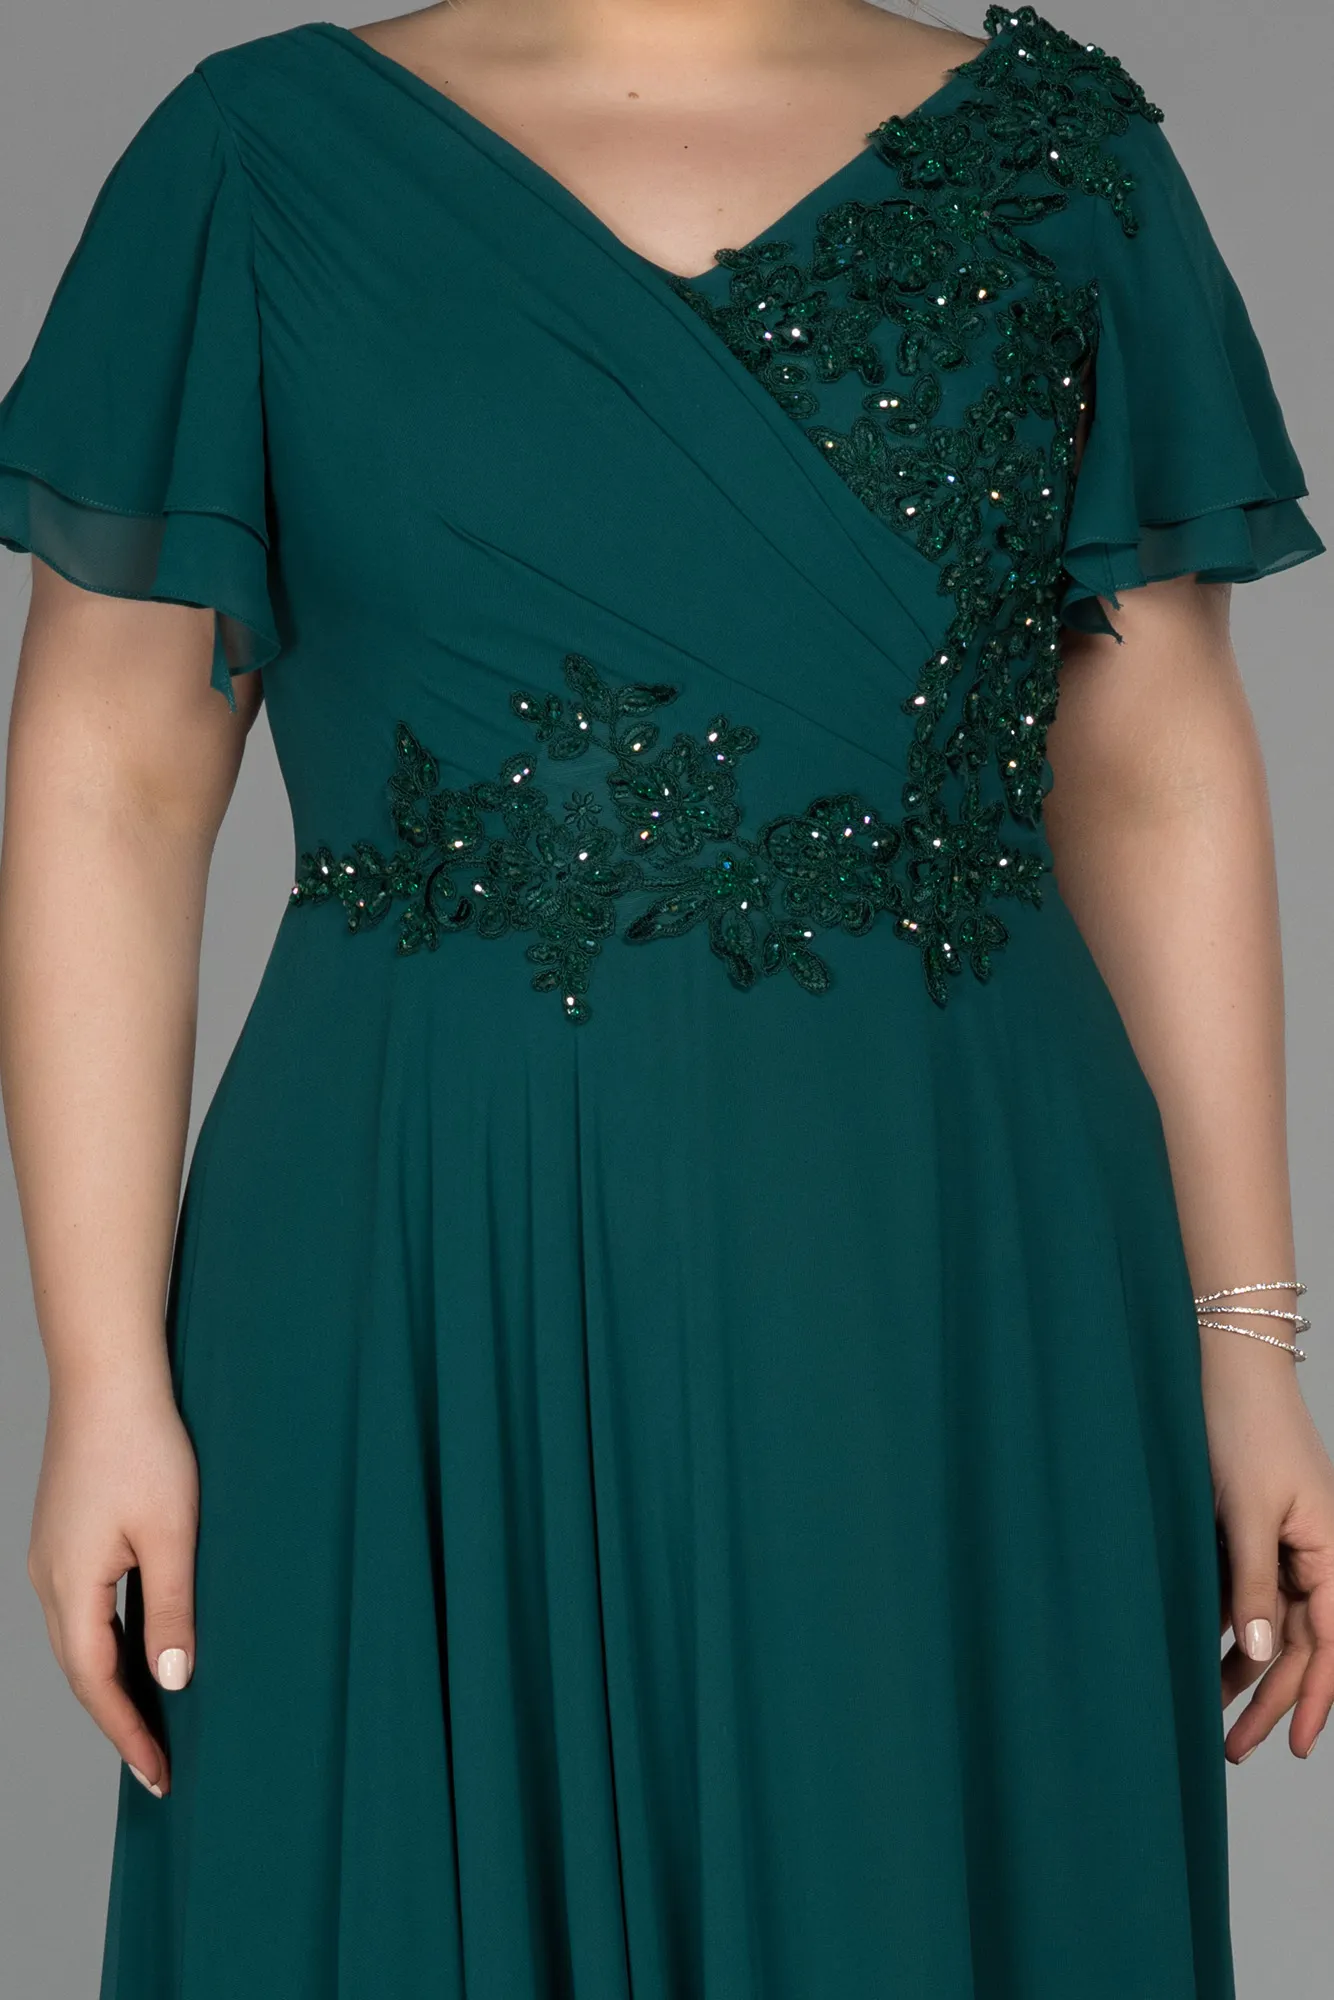 Emerald Green-Long Plus Size Evening Dress ABU1562